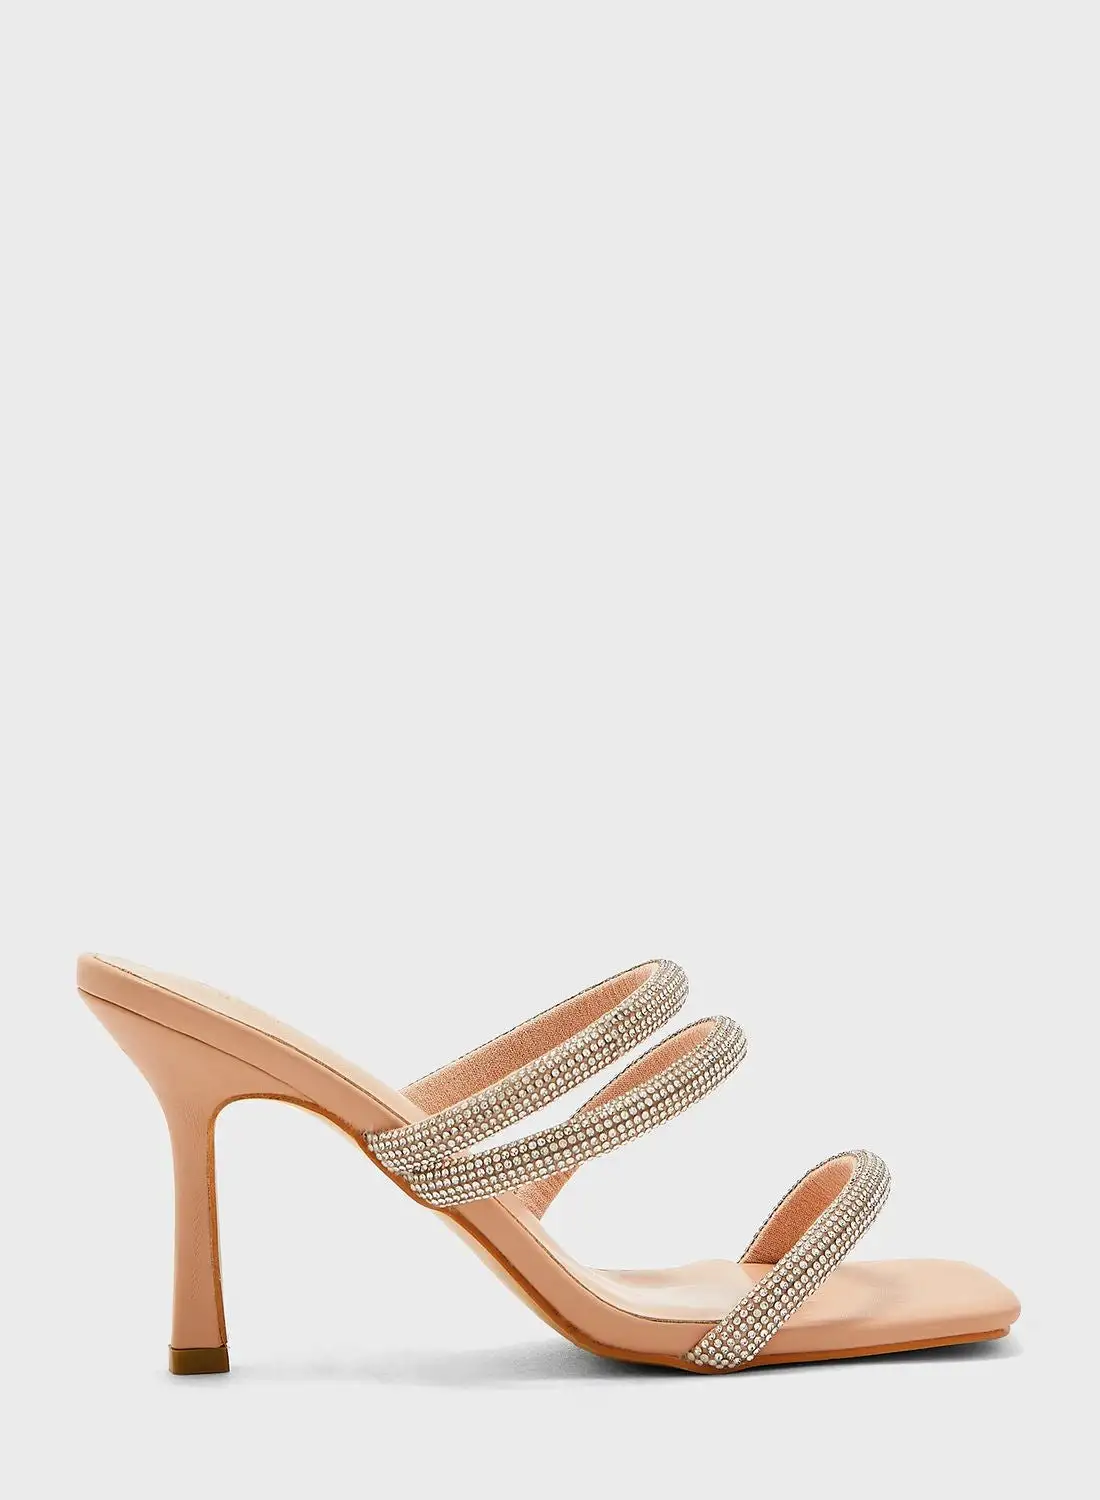 Ella Limited Edition Embellished Strappy Sandals